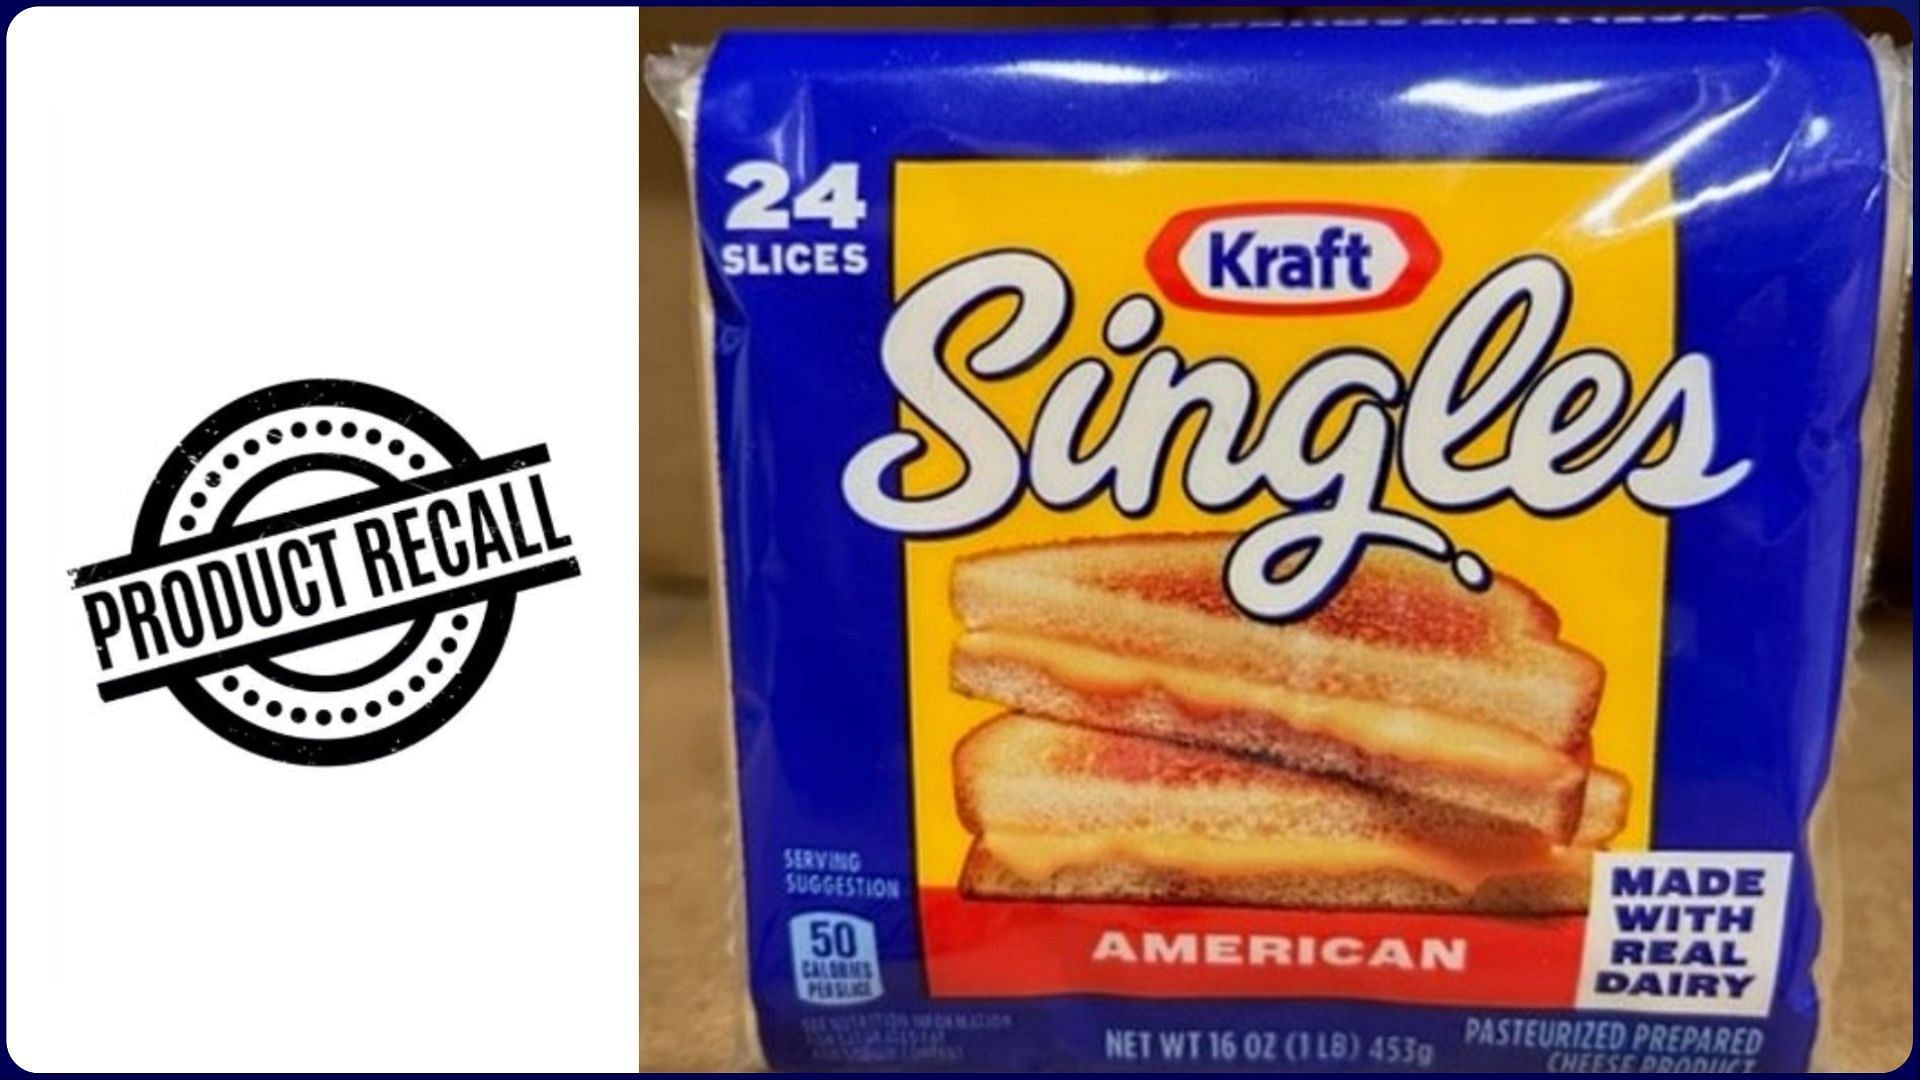 Kraft Heinz recalls its Kraft Singles American Pasteurized Prepared Cheese Products over choking and gagging hazard concerns (Image via Kraft Heinz)